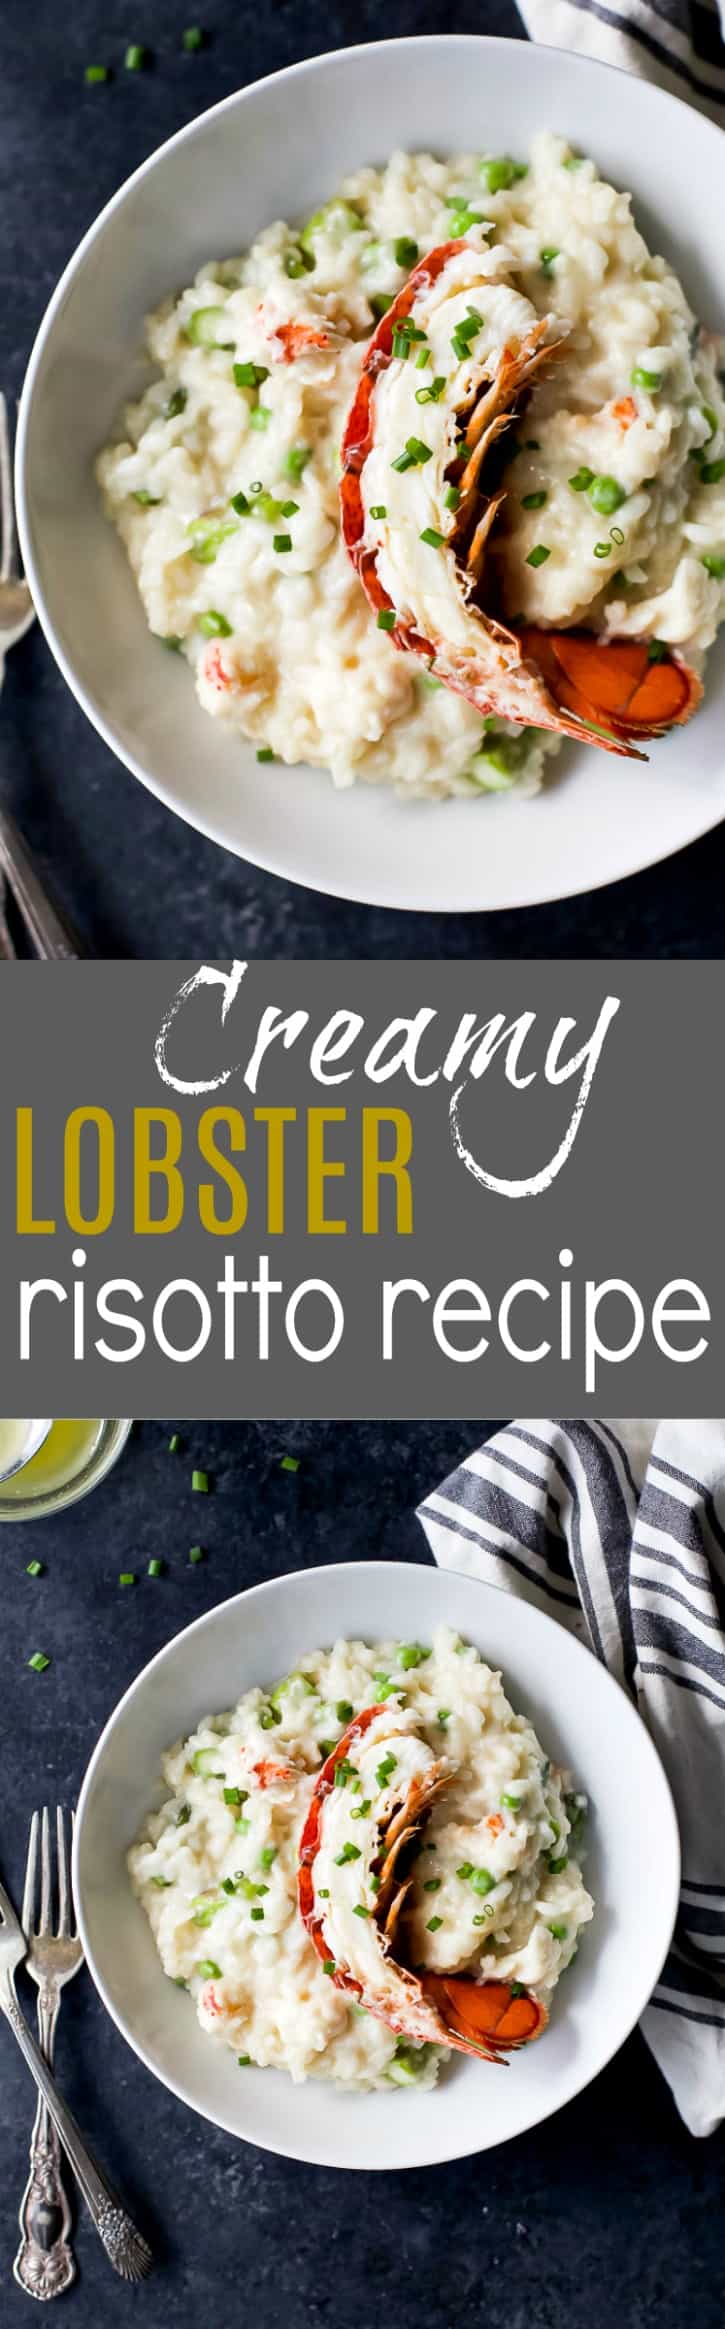 Collage for Creamy Lobster Risotto recipe